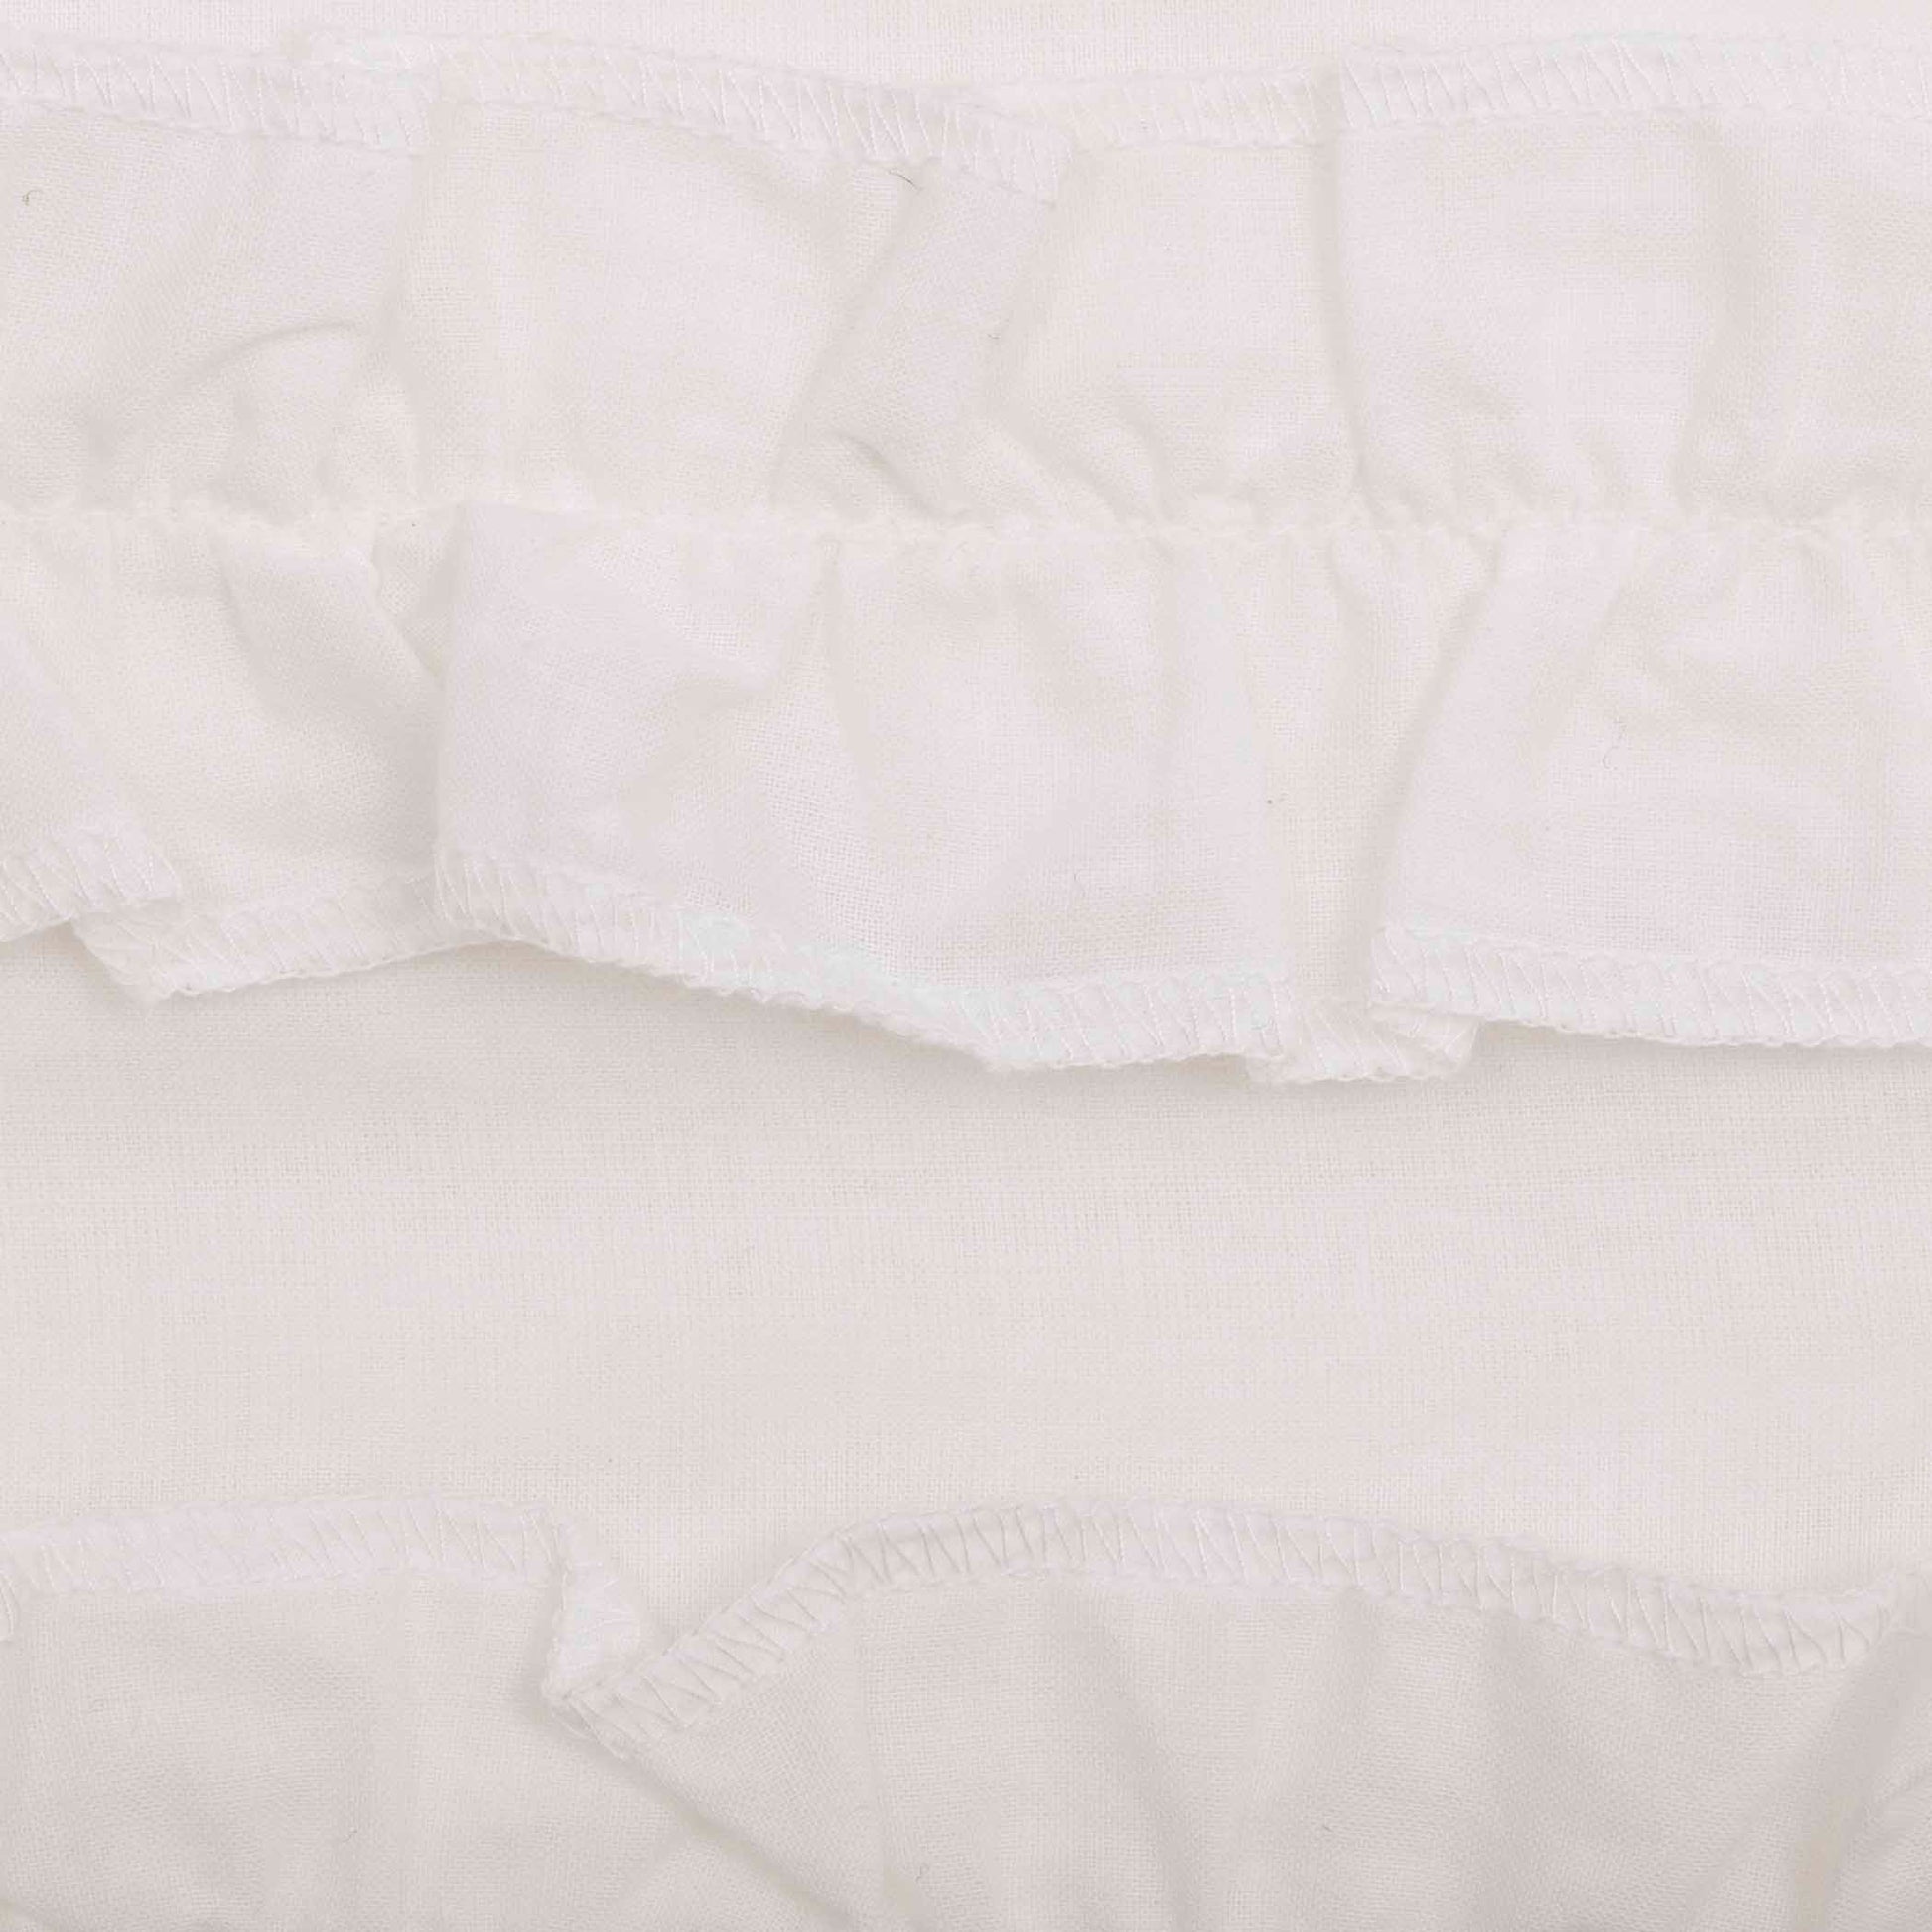 61665-White-Ruffled-Sheer-Petticoat-Prairie-Long-Panel-Set-of-2-84x36x18-image-8